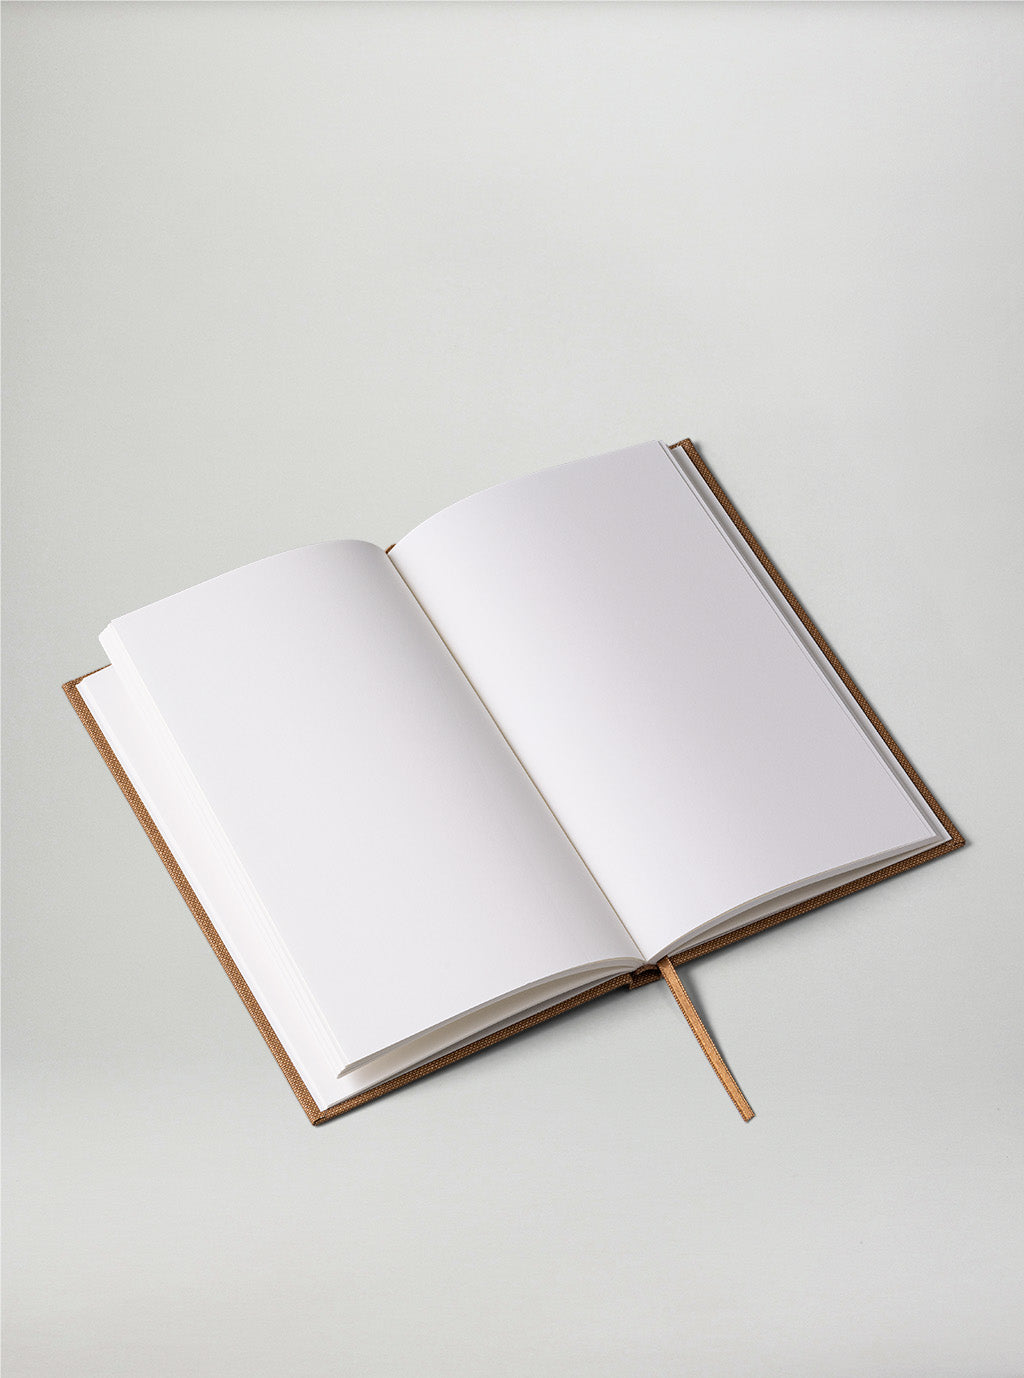 Notebook Brown - Hardcover/Blank